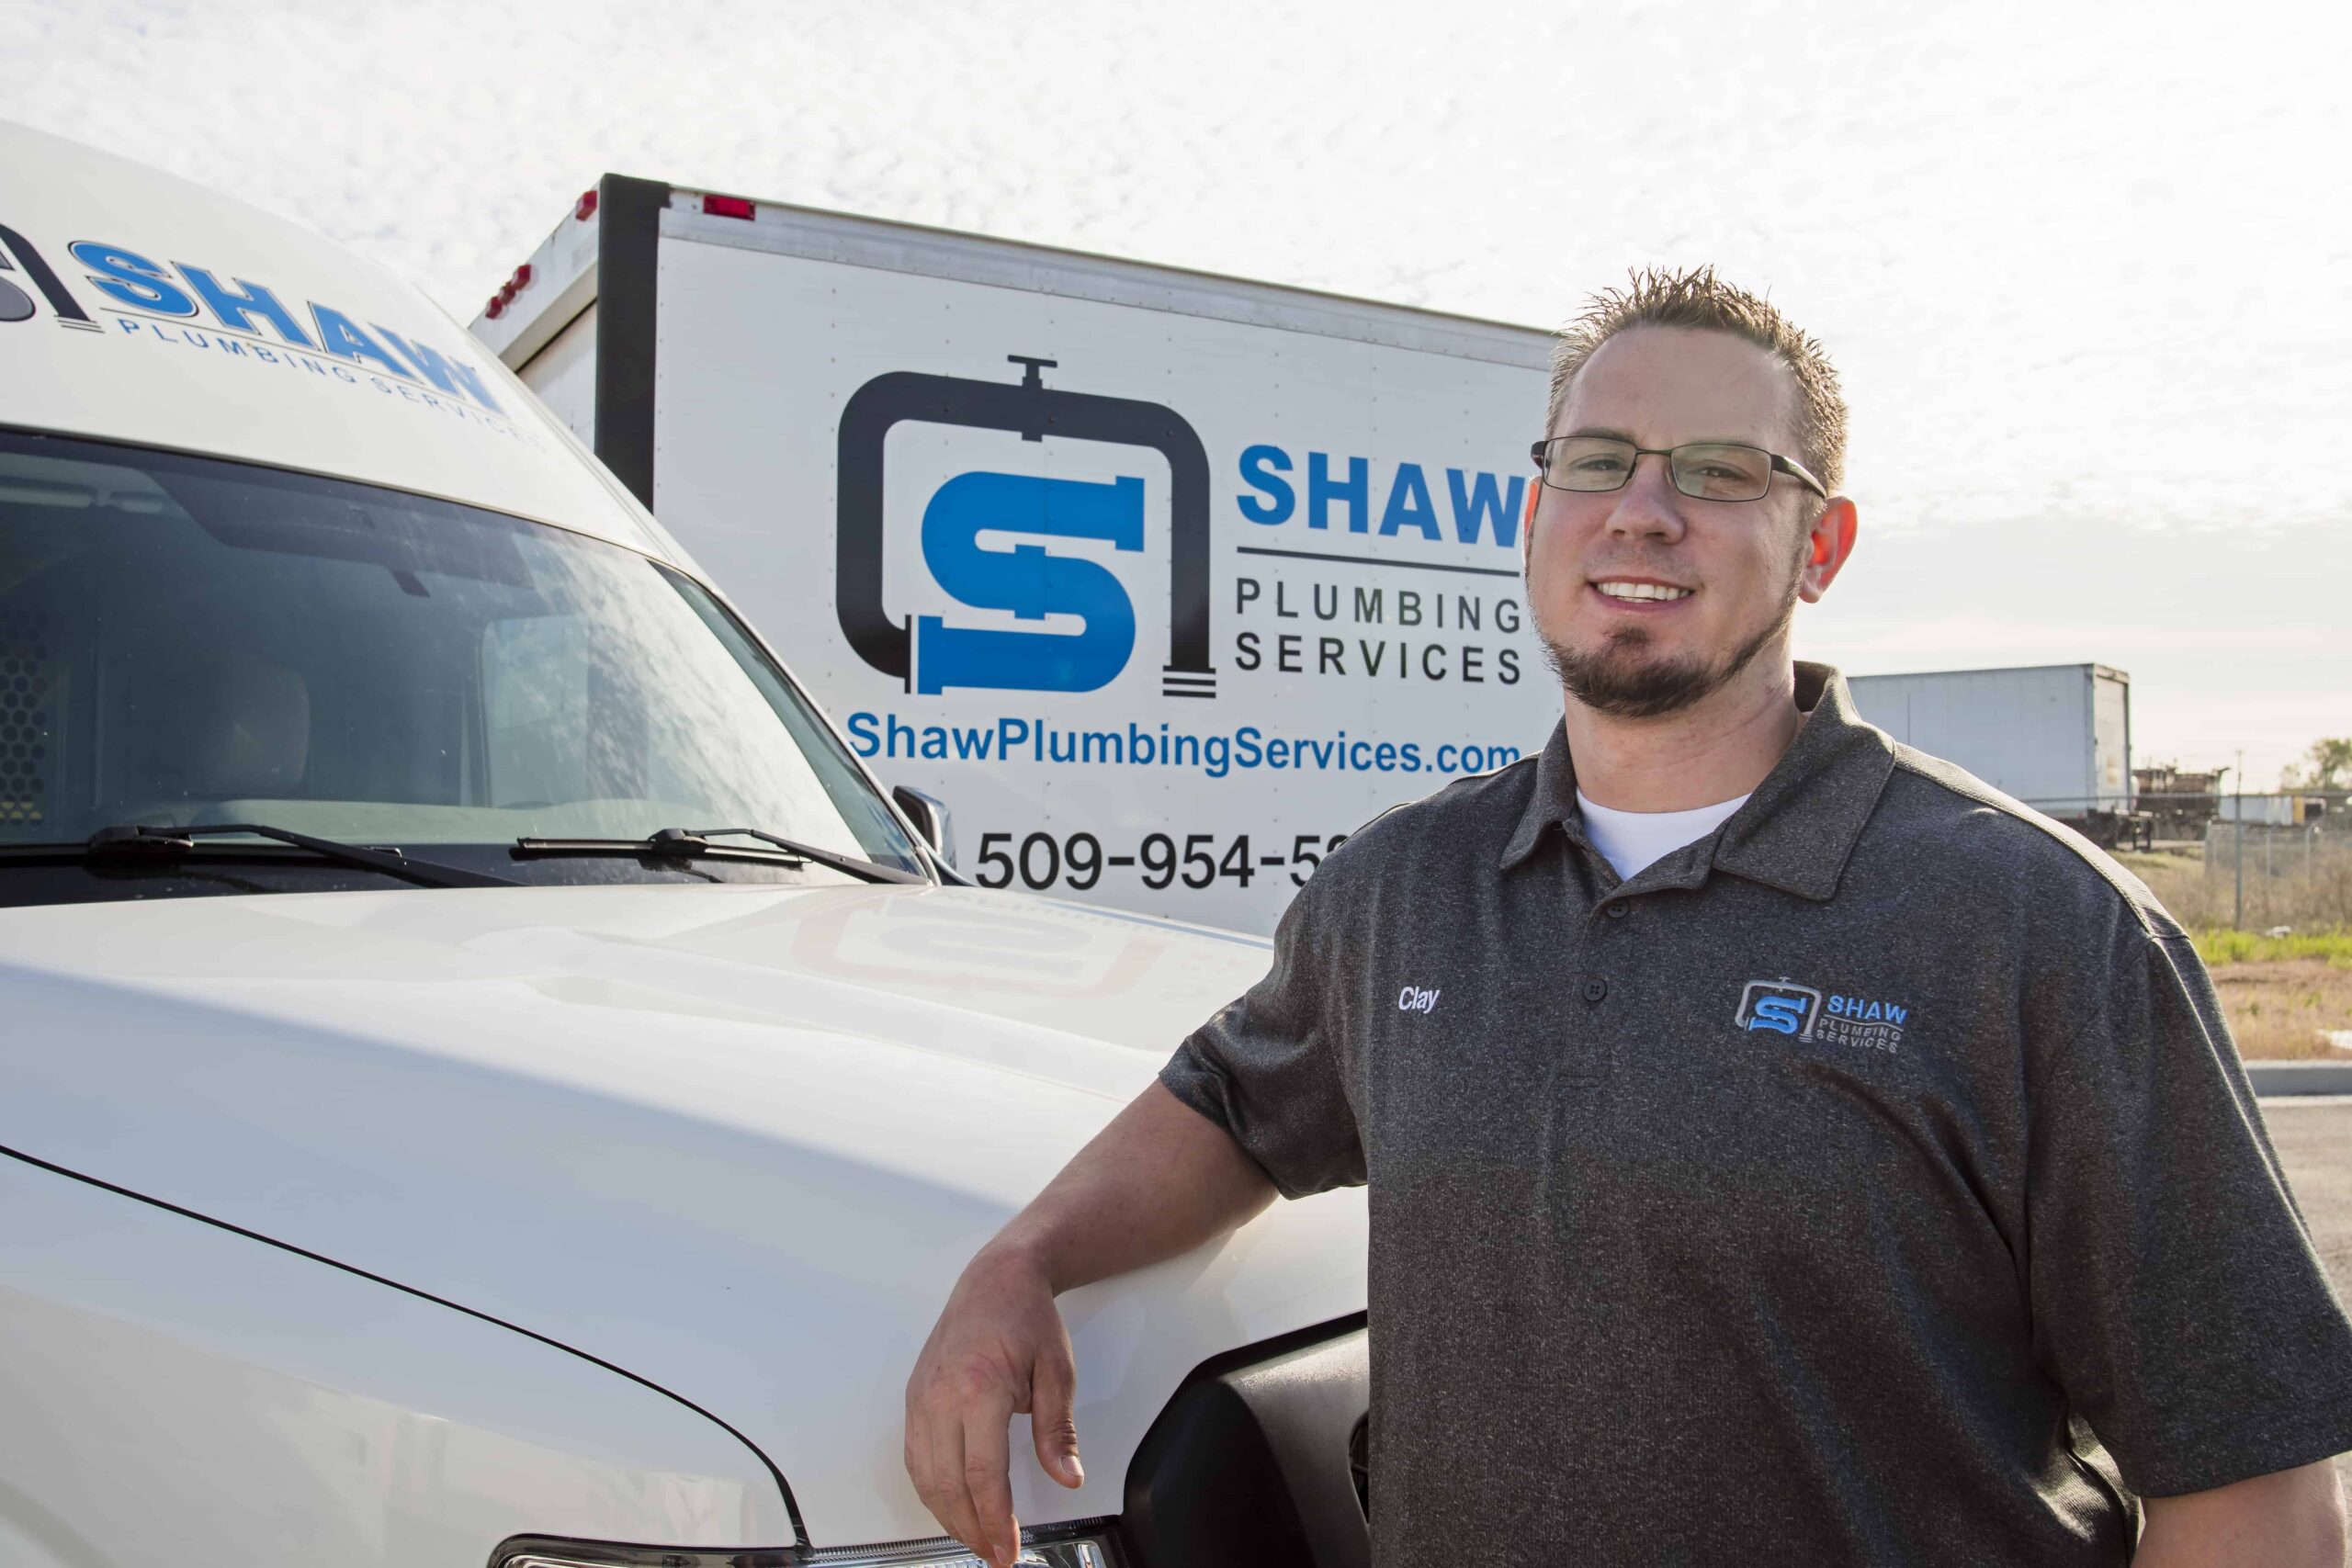 Tim from Shaw Plumbing